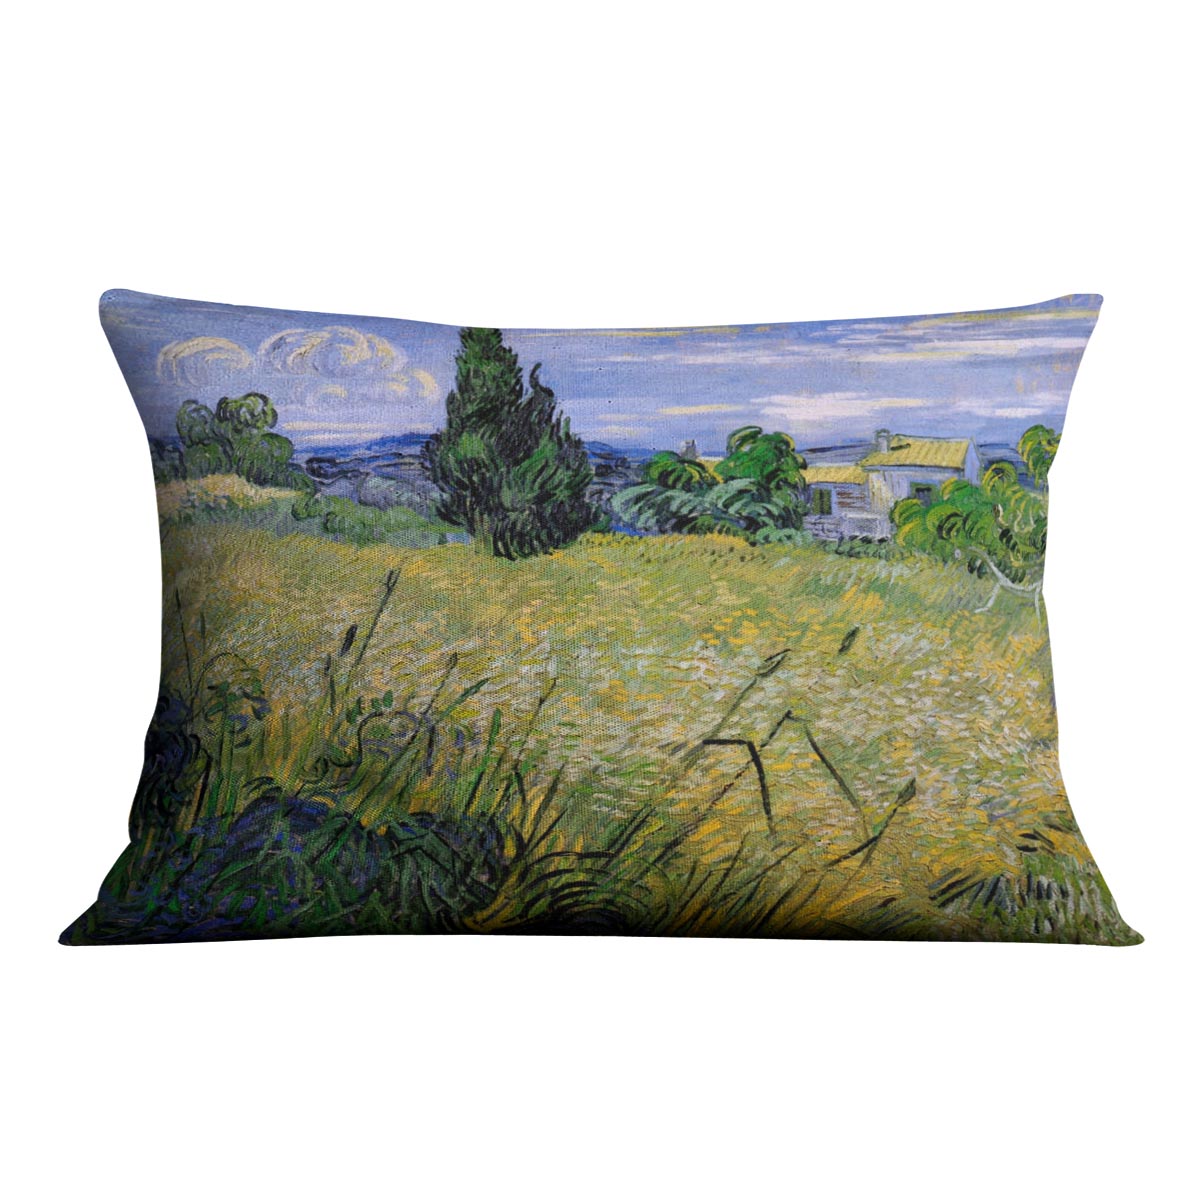 Green Wheat Field with Cypress by Van Gogh Cushion